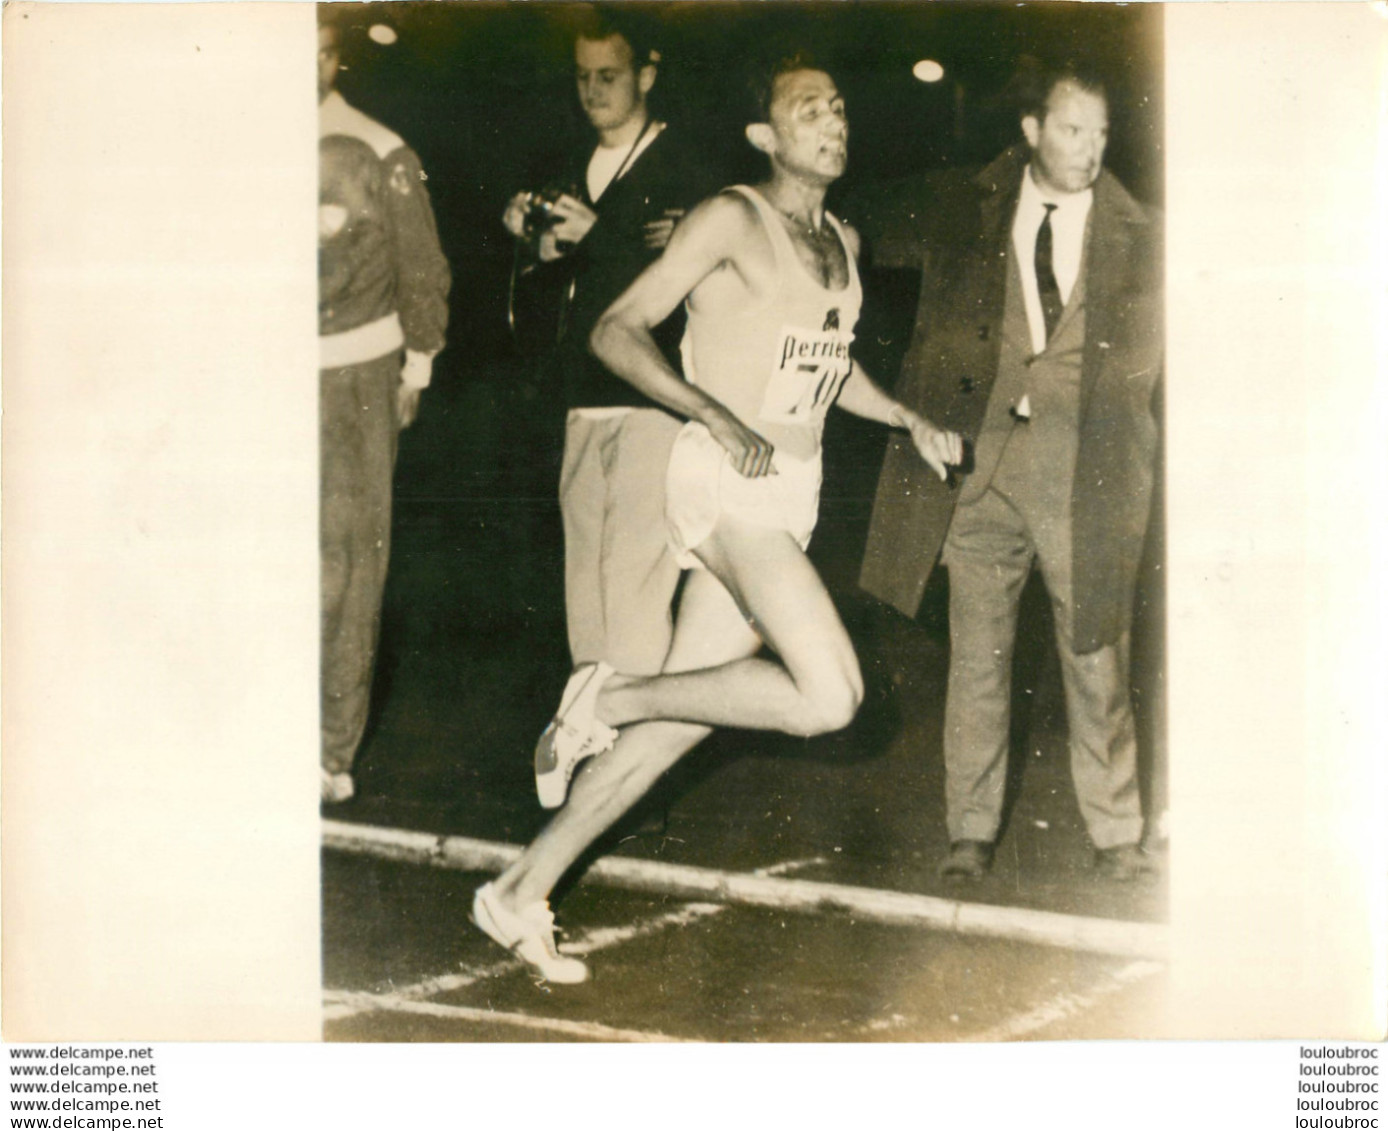 MICHEL JAZY BAT LE RECORD DU MONDE DES 2 MILES 06/1963 PHOTO KEYSTONE FORMAT 24 X 18 CM - Sports